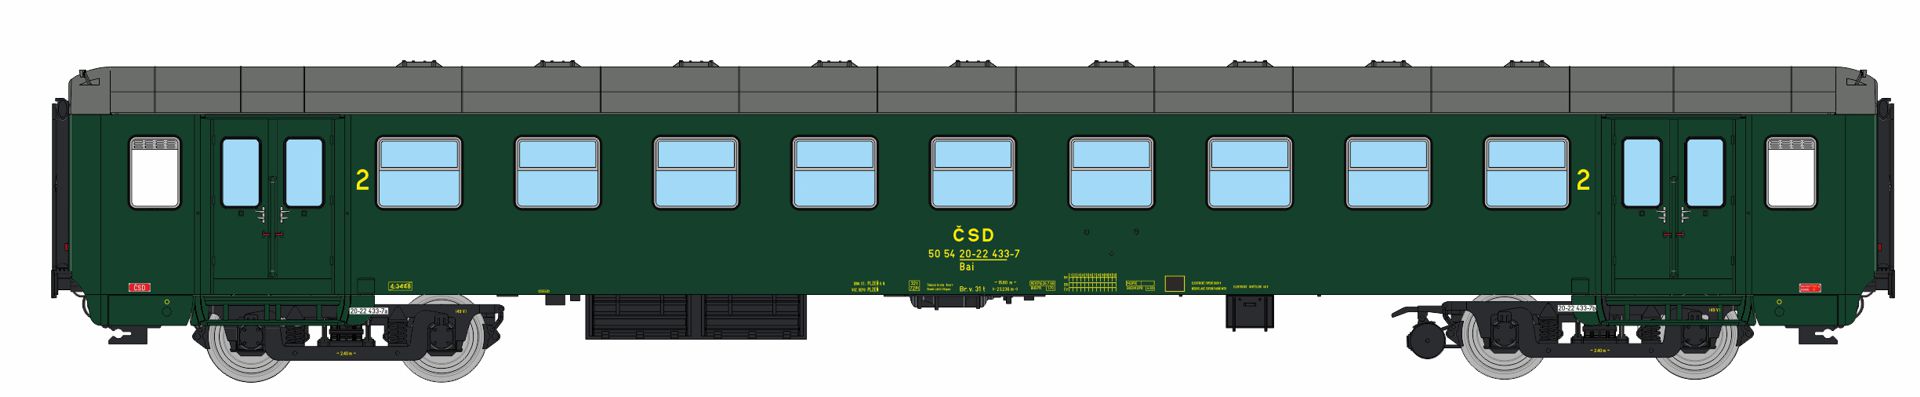 igra 97110038 - Personenwagen Bai 'Plzen', CSD, Ep.IV